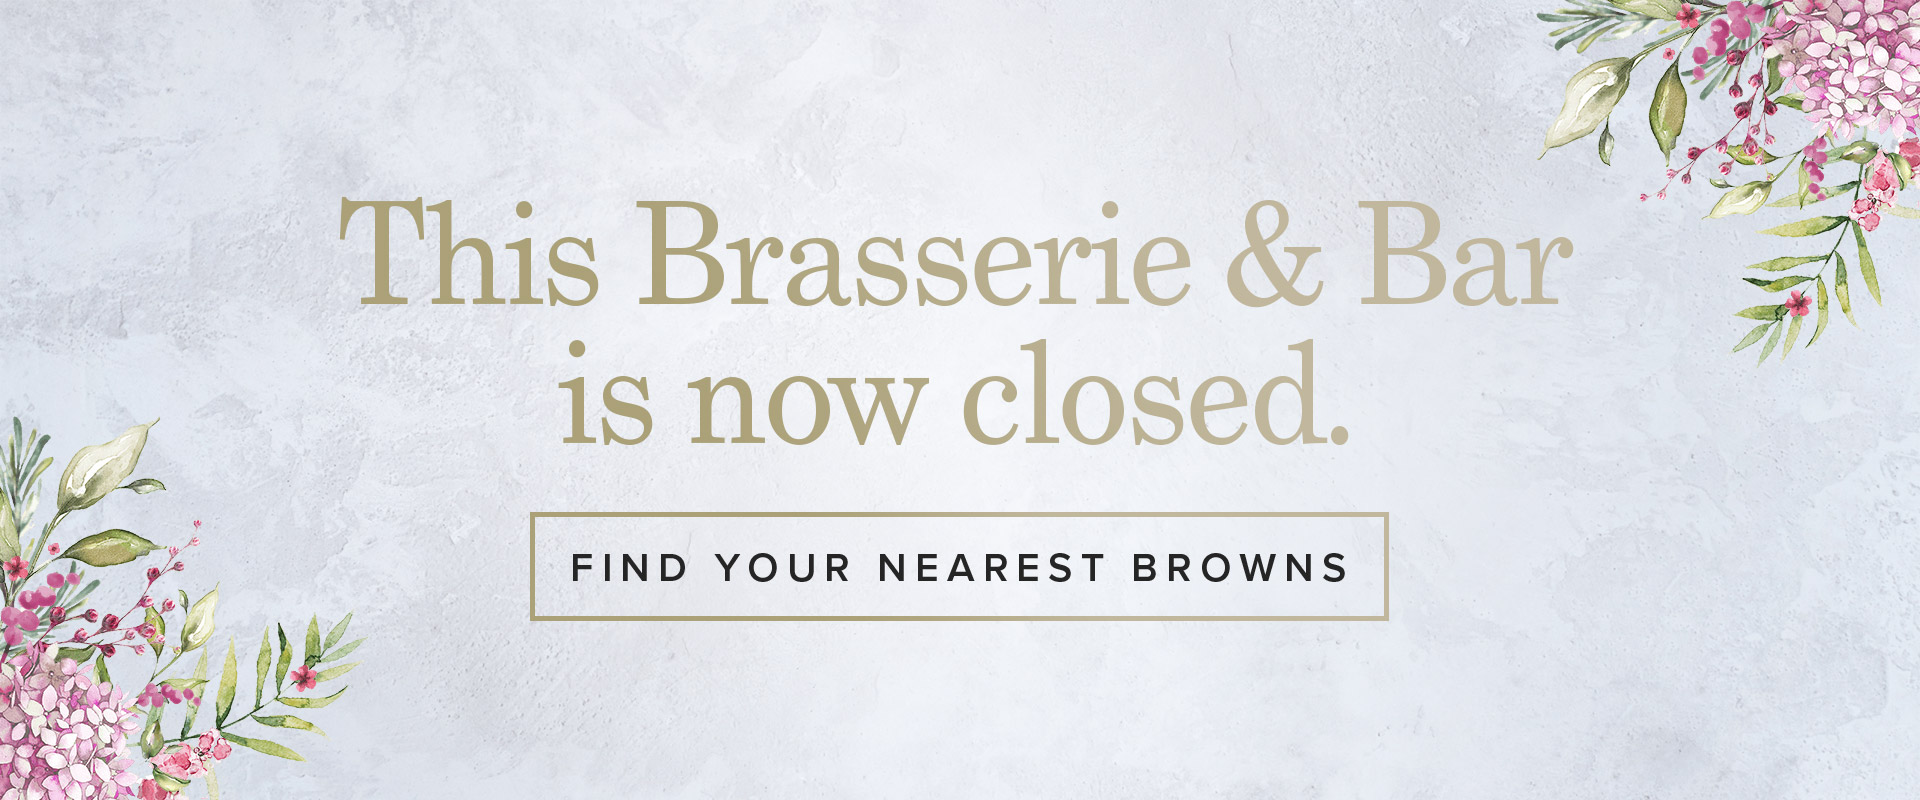 Browns-Closed-Web-Banner.jpg